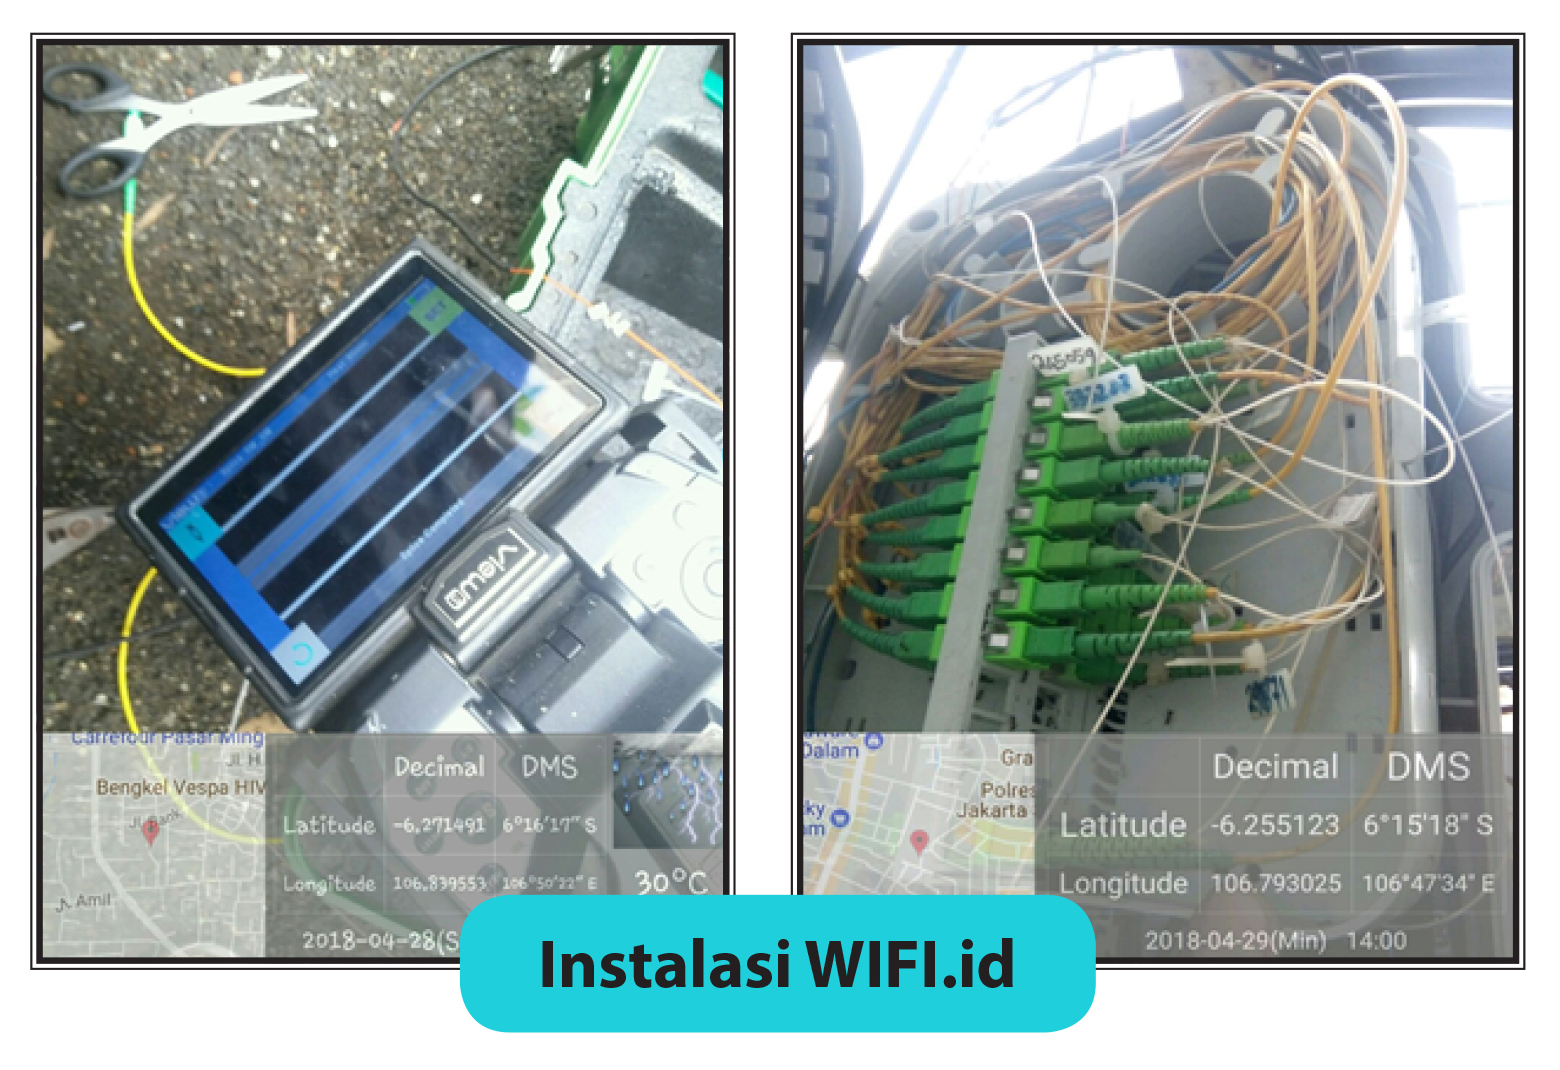 Project Instalasi WIFI id